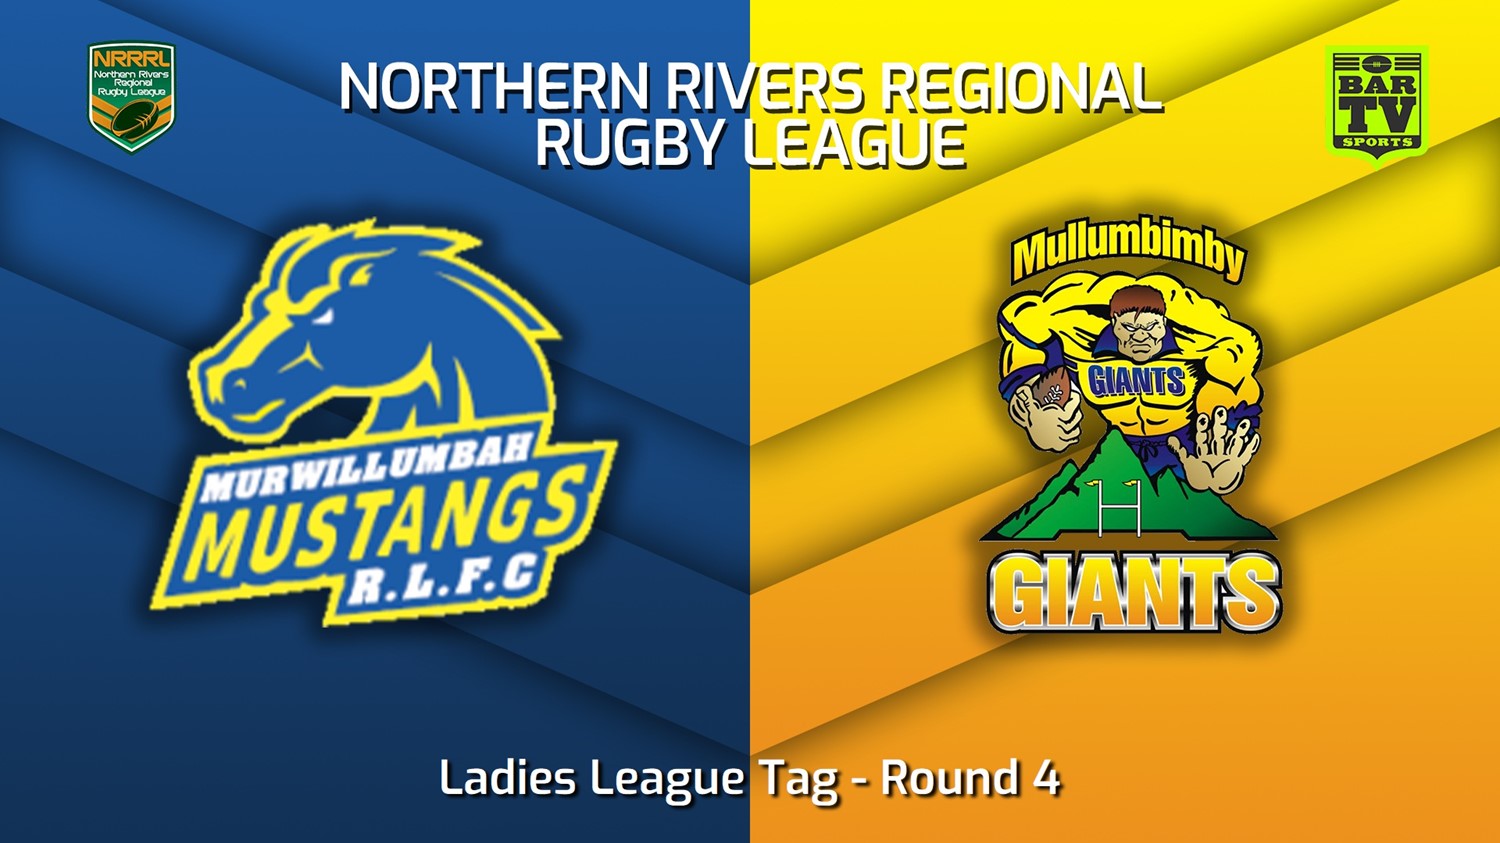 220730-Northern Rivers Round 4 - Ladies League Tag - Murwillumbah Mustangs v Mullumbimby Giants Slate Image